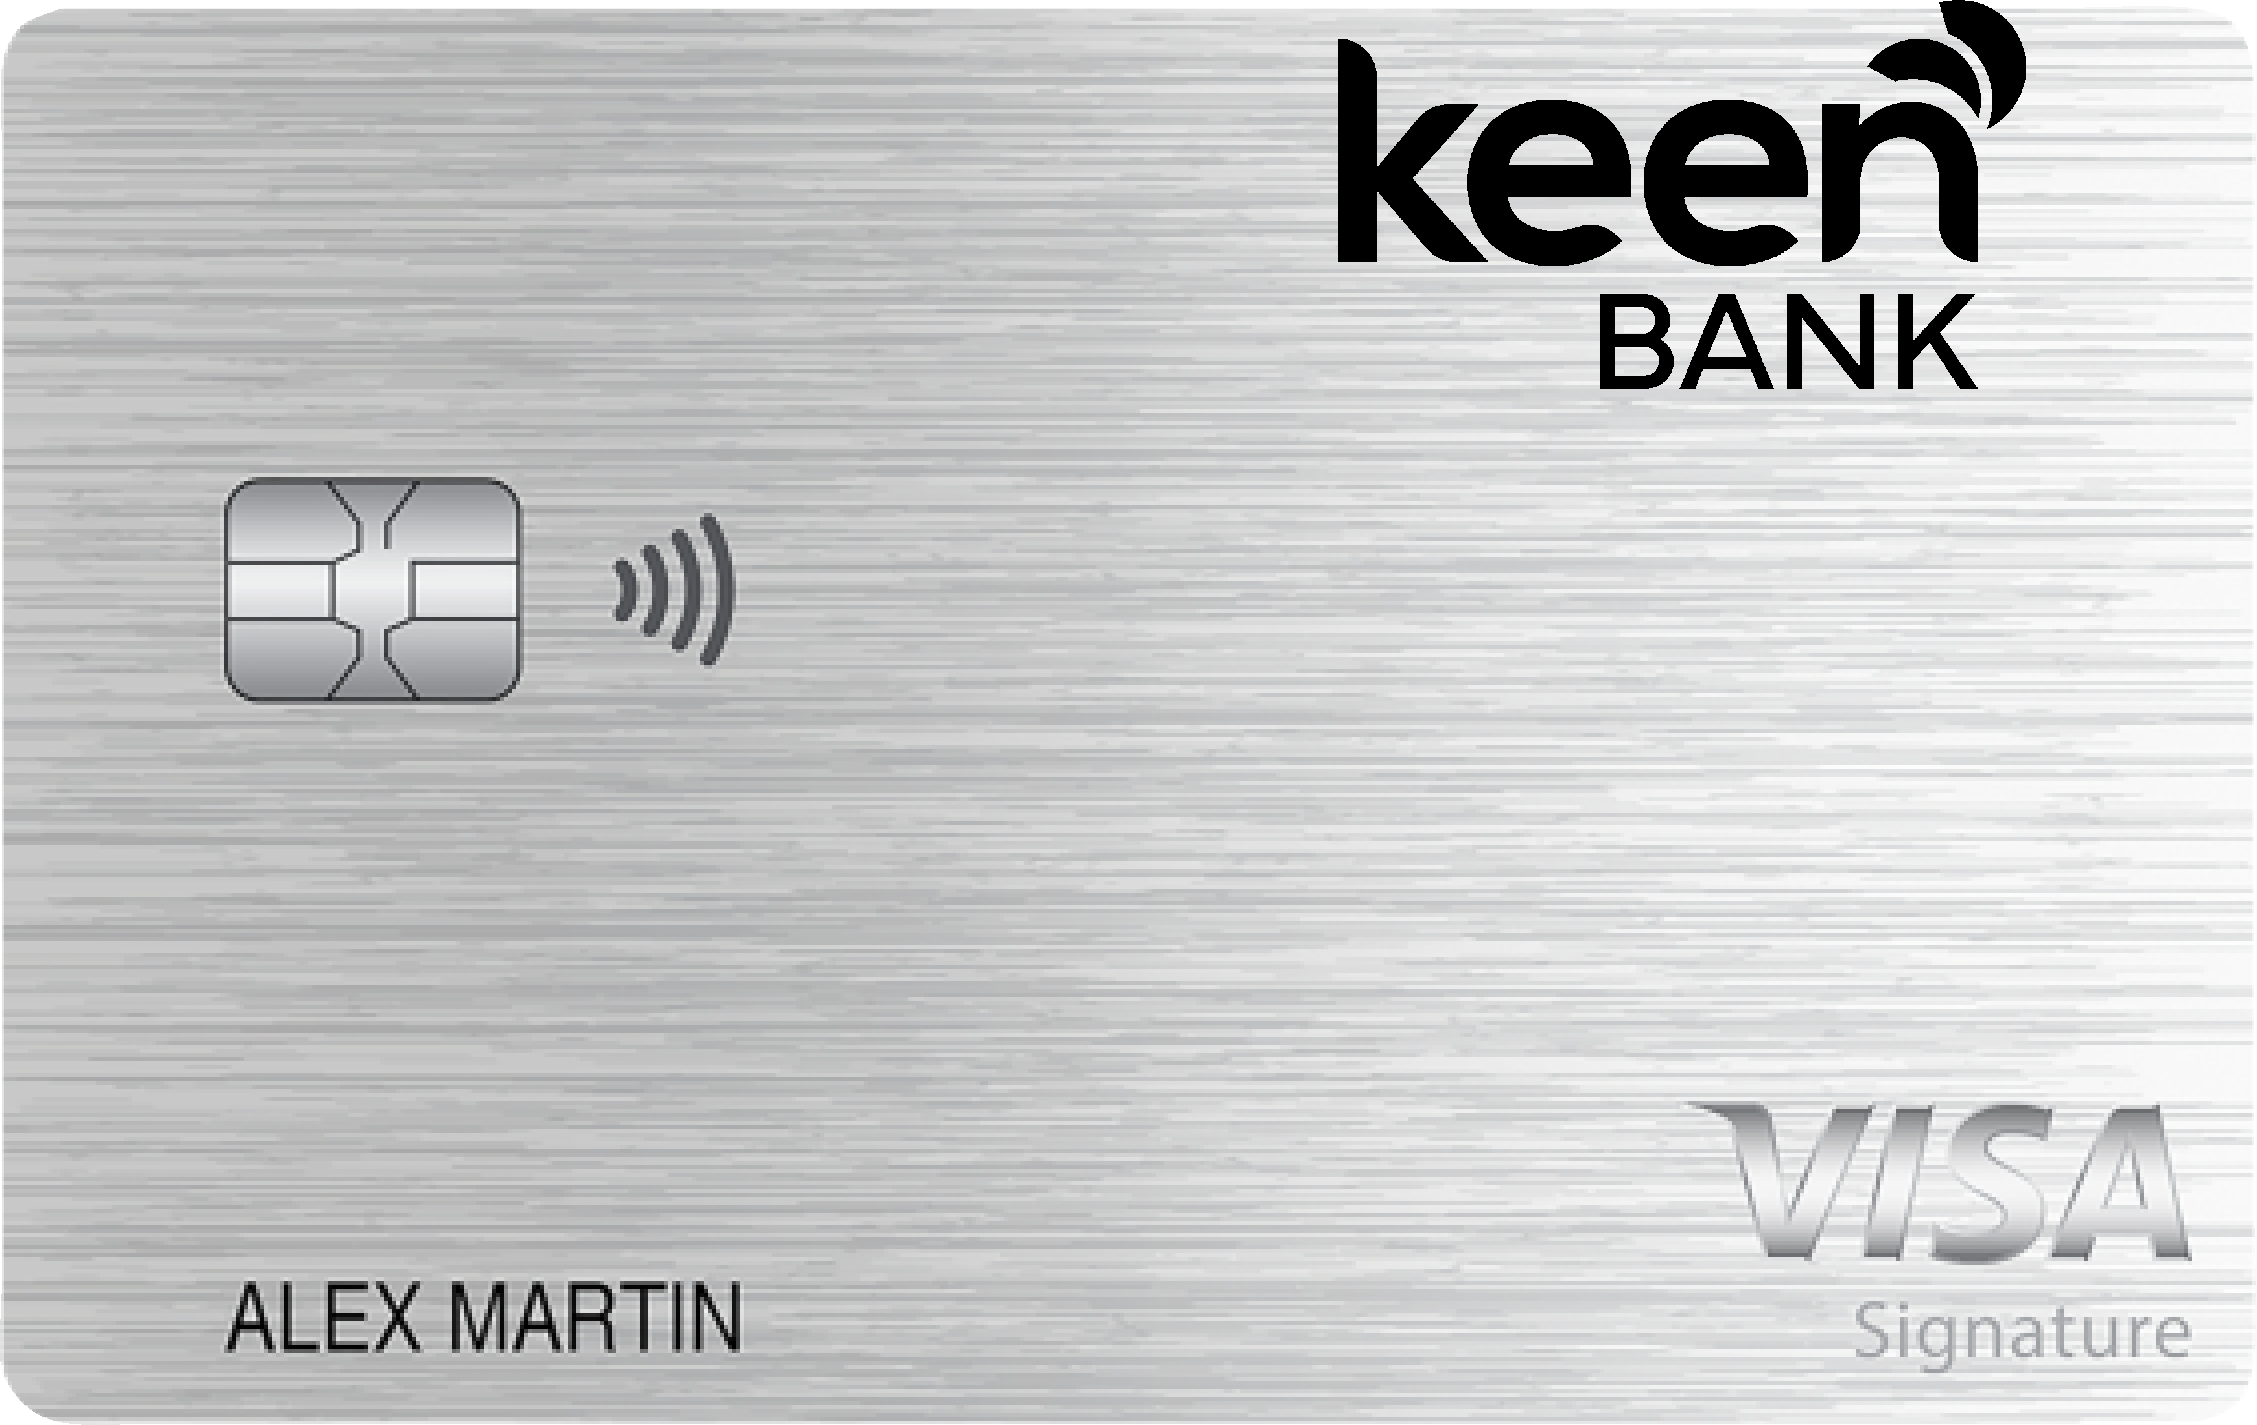 Keen Bank Everyday Rewards+ Card